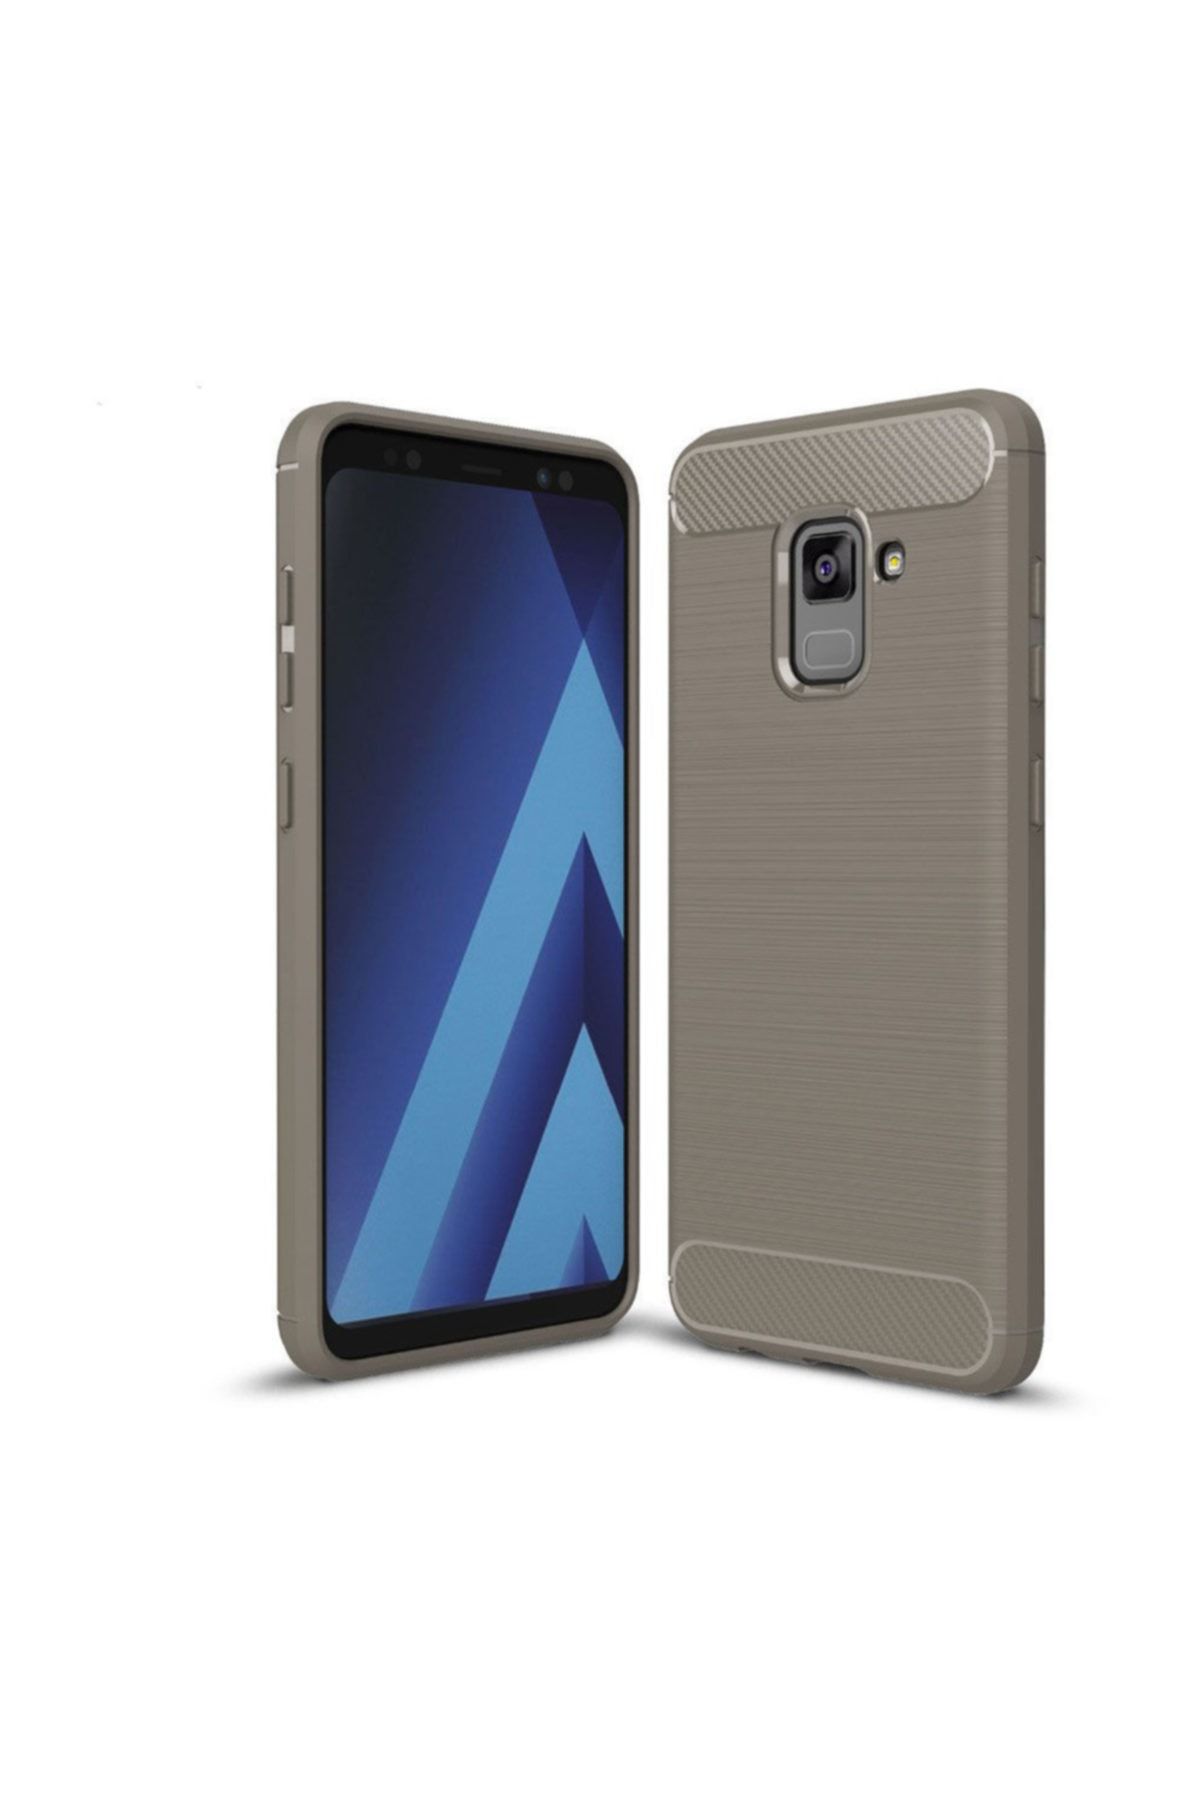 Kılıfist Galaxy A8 2018 Uyumlu Kılıf Karbon Fiber Room Silikon Kapak Kılıf + Cam